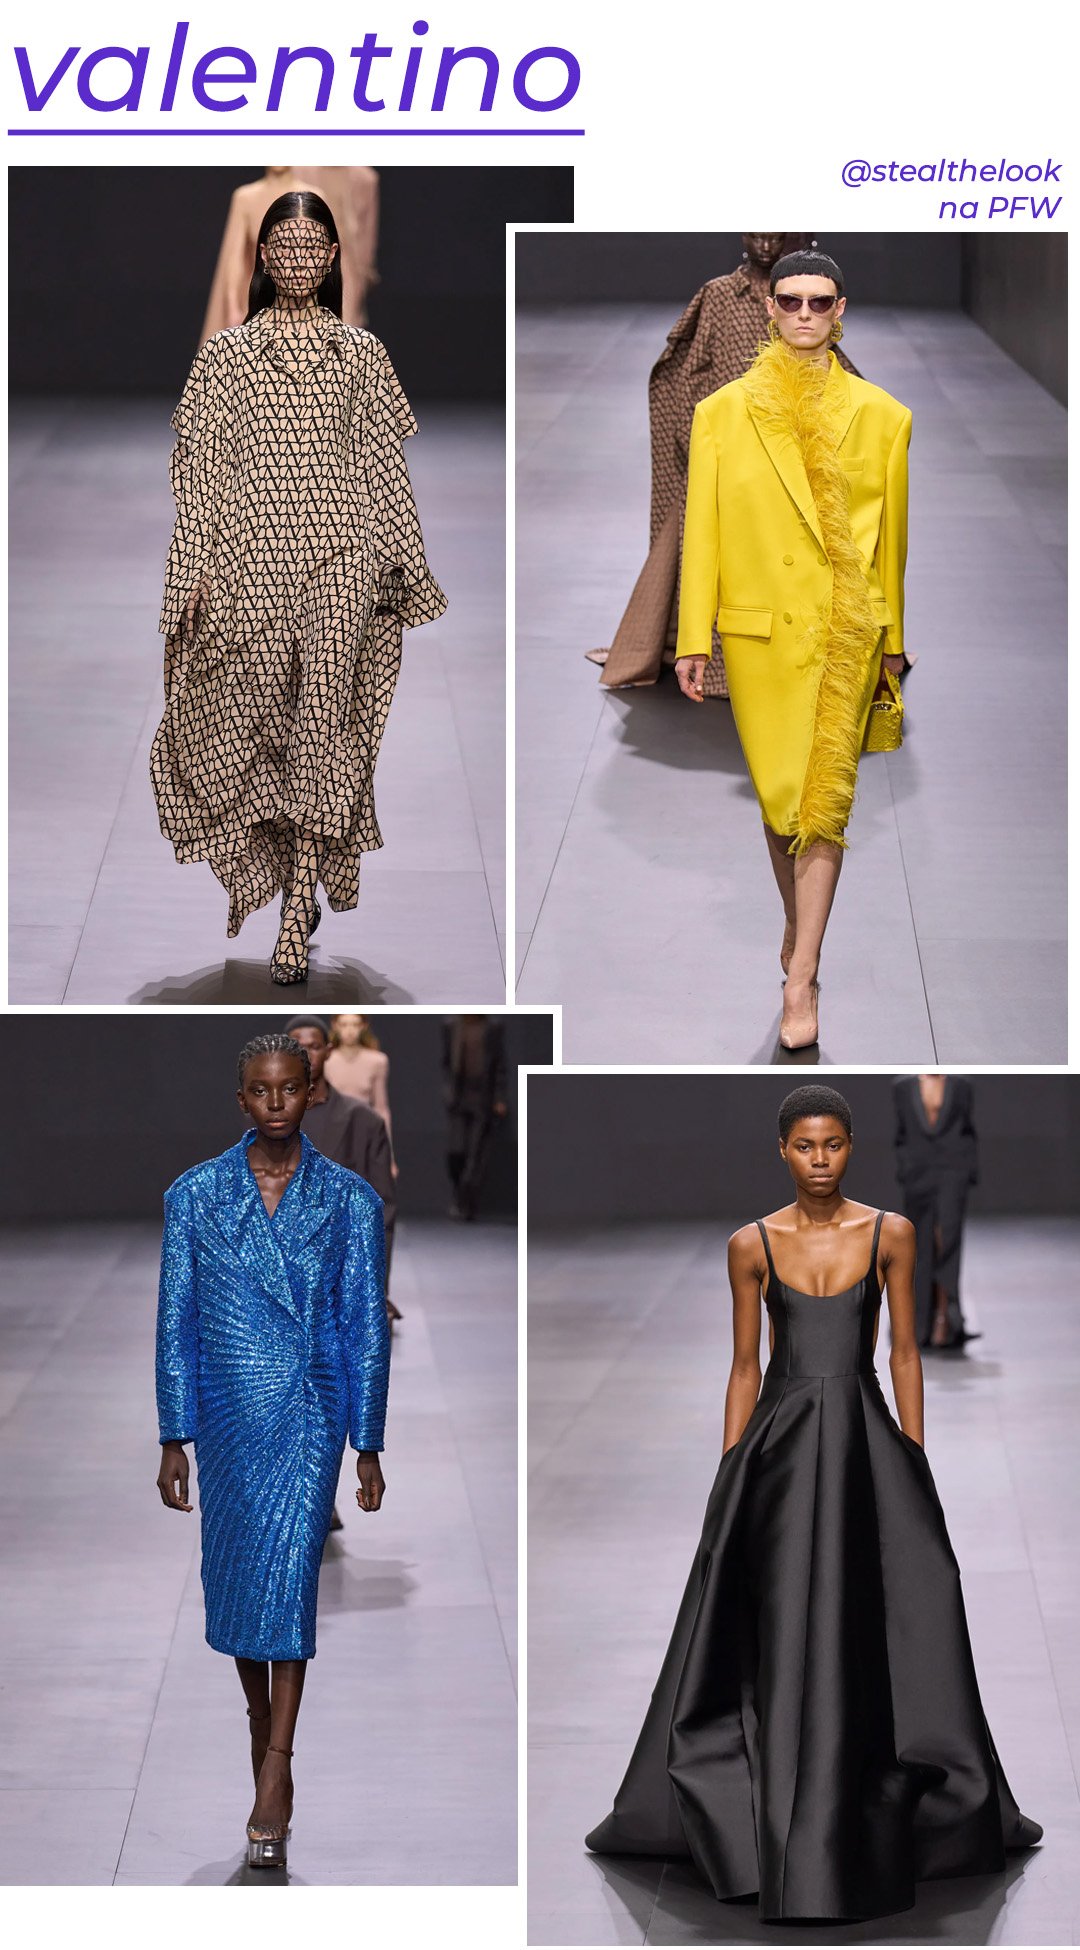 Valentino S/S 2023 - roupas diversas - Paris Fashion Week - Primavera - modelo andando pela passarela - https://stealthelook.com.br